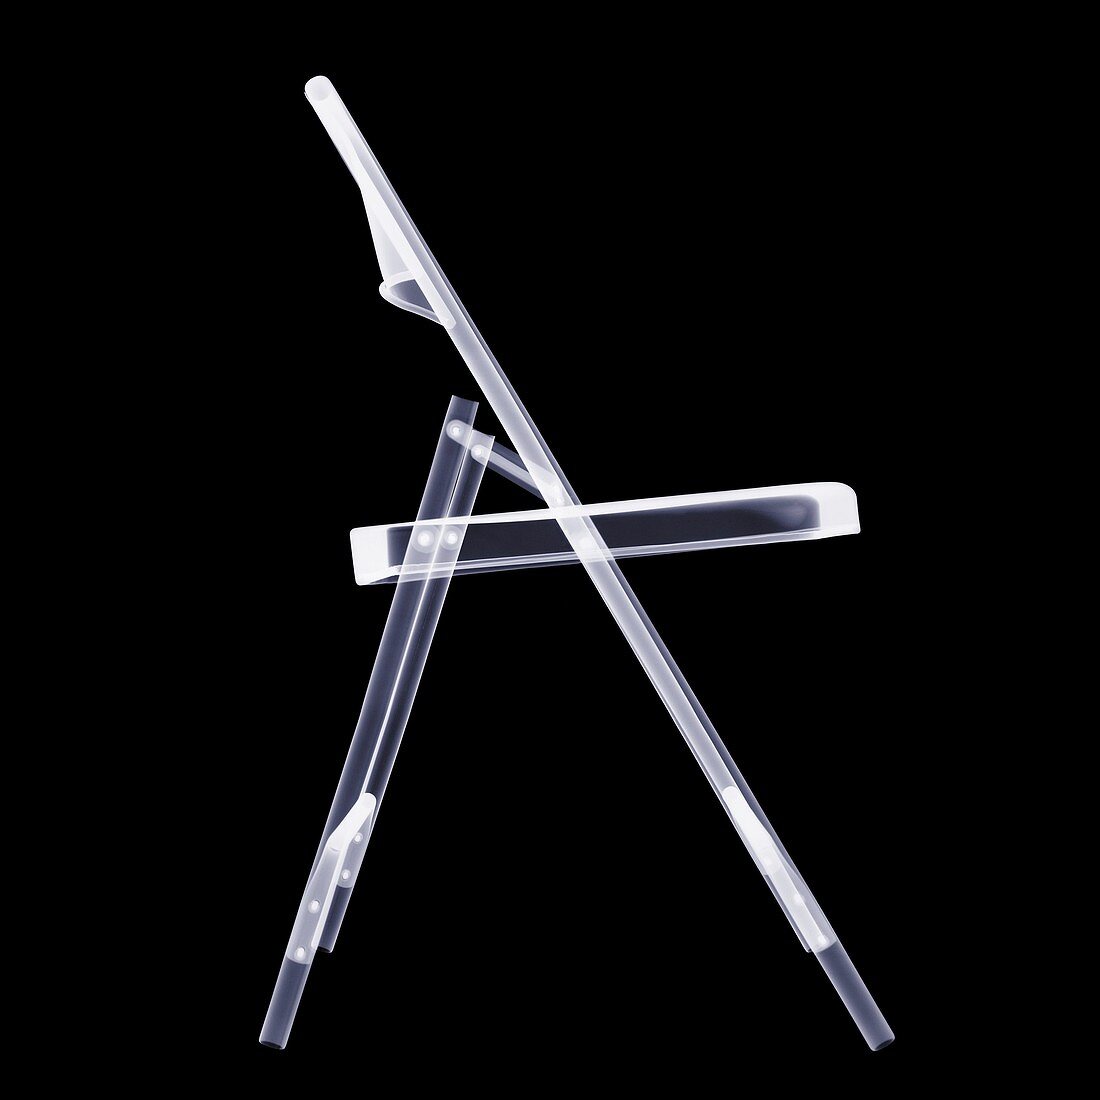 Folding chair, X-ray